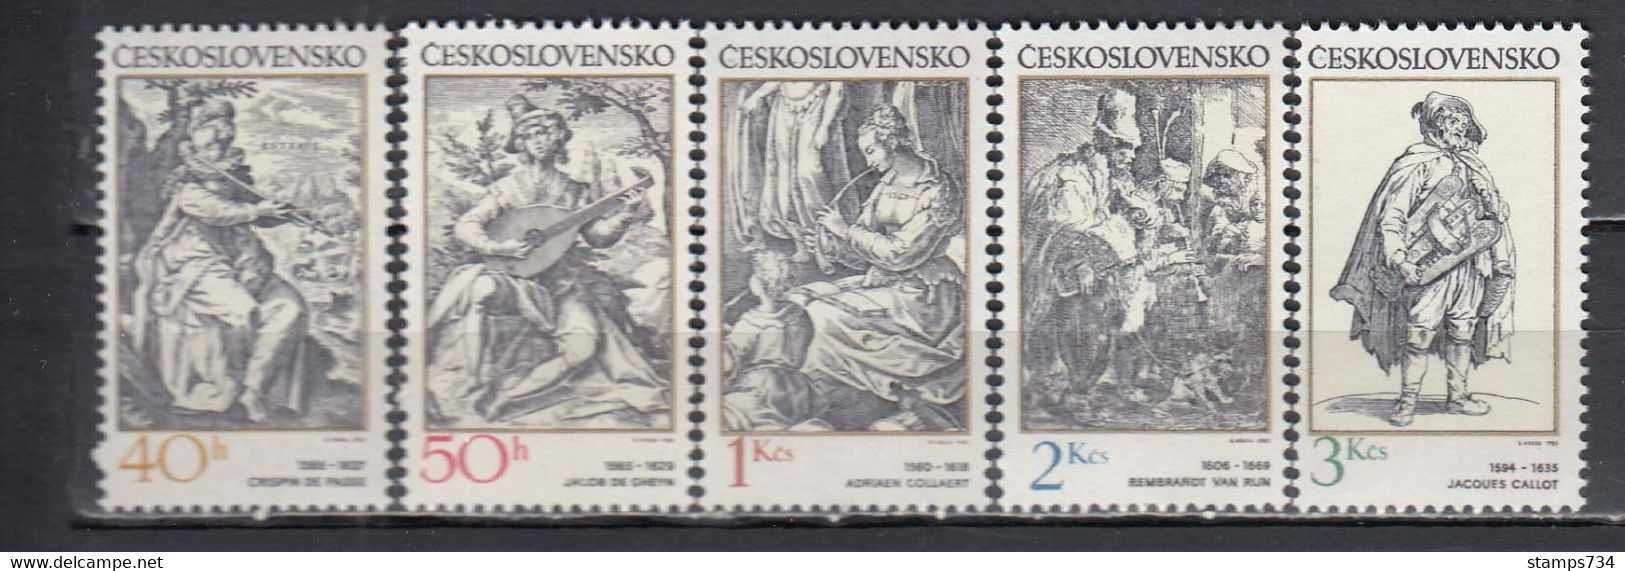 Czechoslovakia 1982 - Music Motifs On Old Engravings, Mi-Nr. 2661/65, MNH** - Ungebraucht